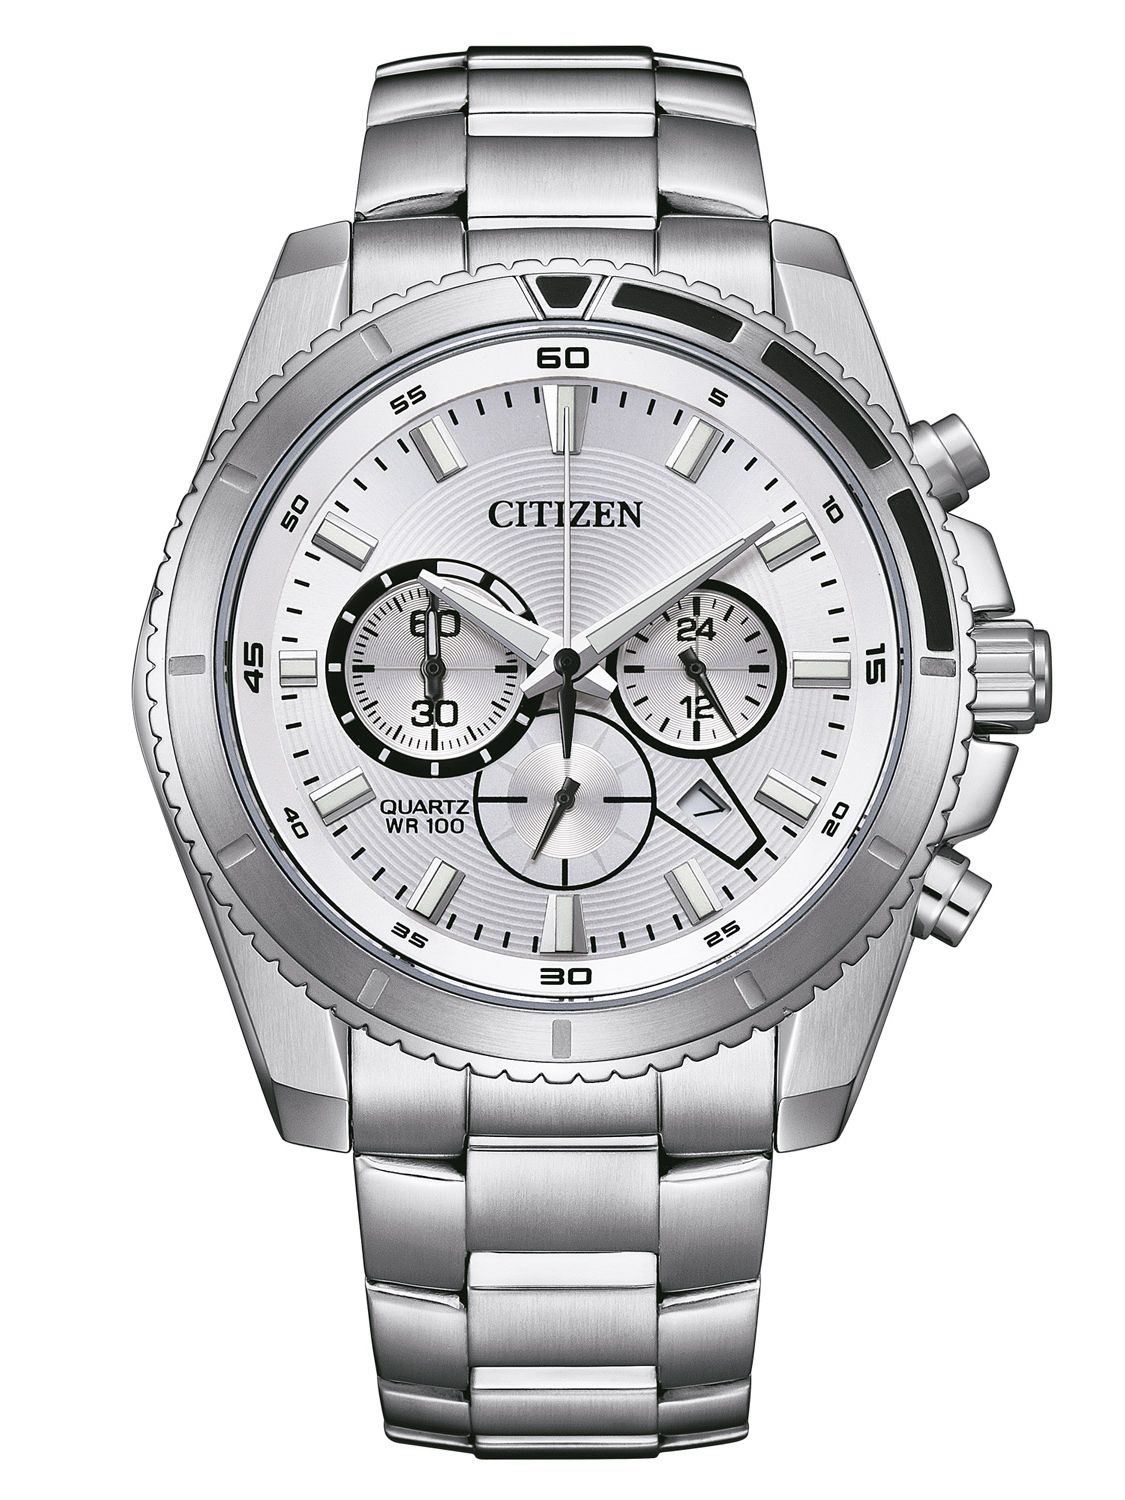 Citizen Men\'s Watch Chronograph Steel/Silver Tone AN8200-50A uhrcenter •